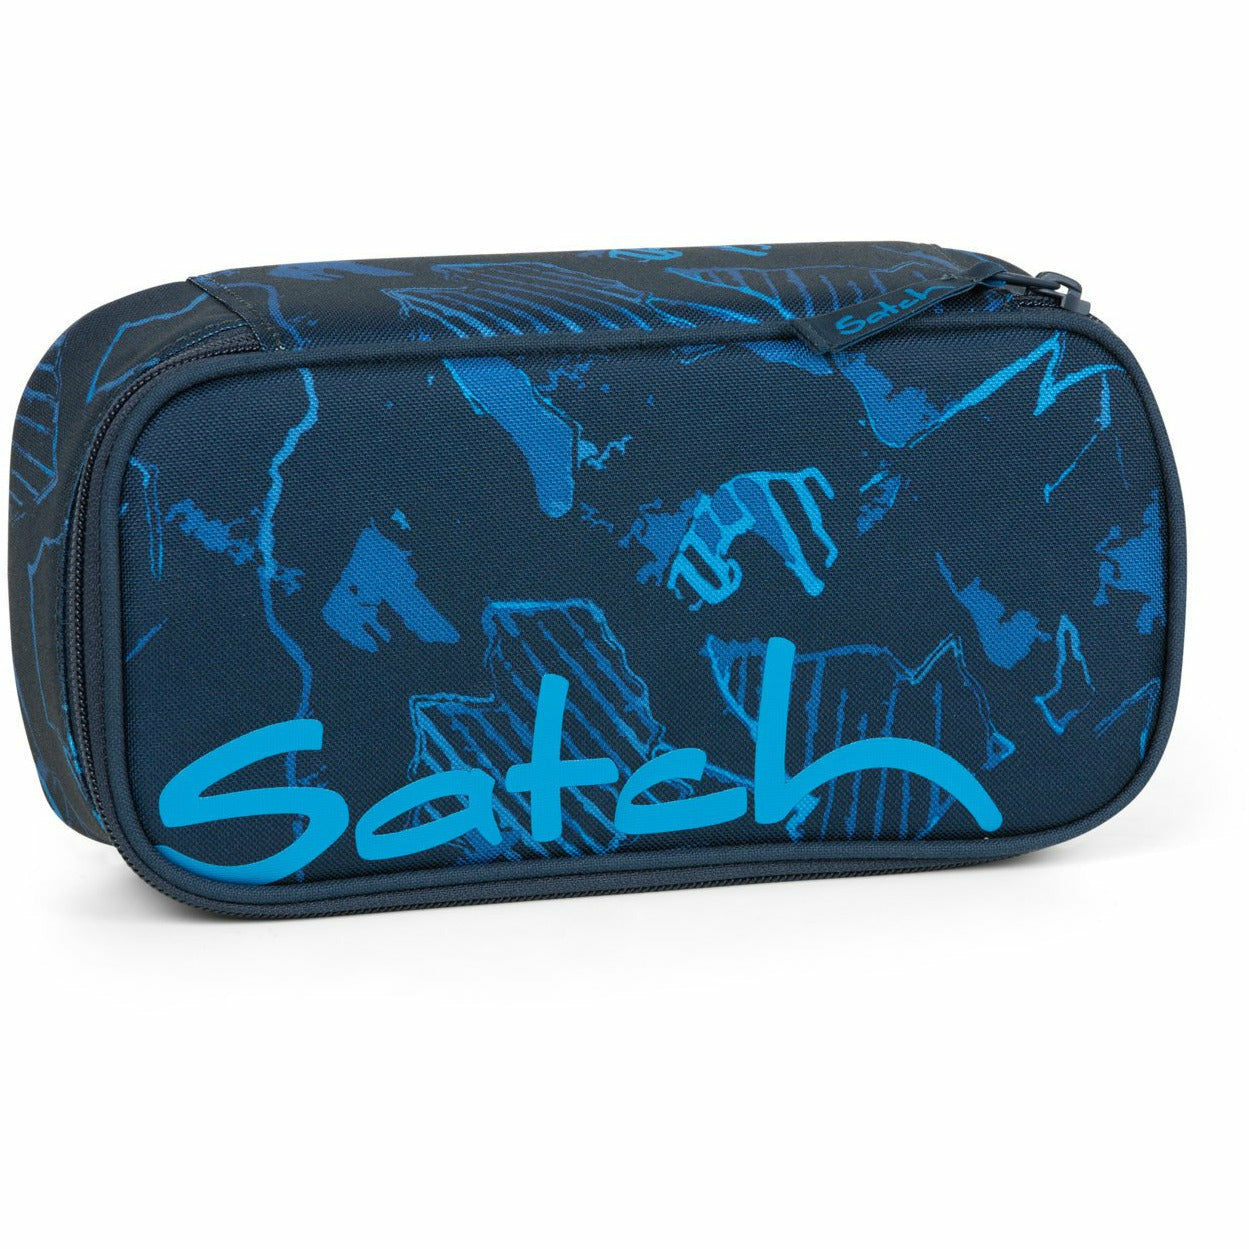 satch | satch Pencil Box | Blue Compass